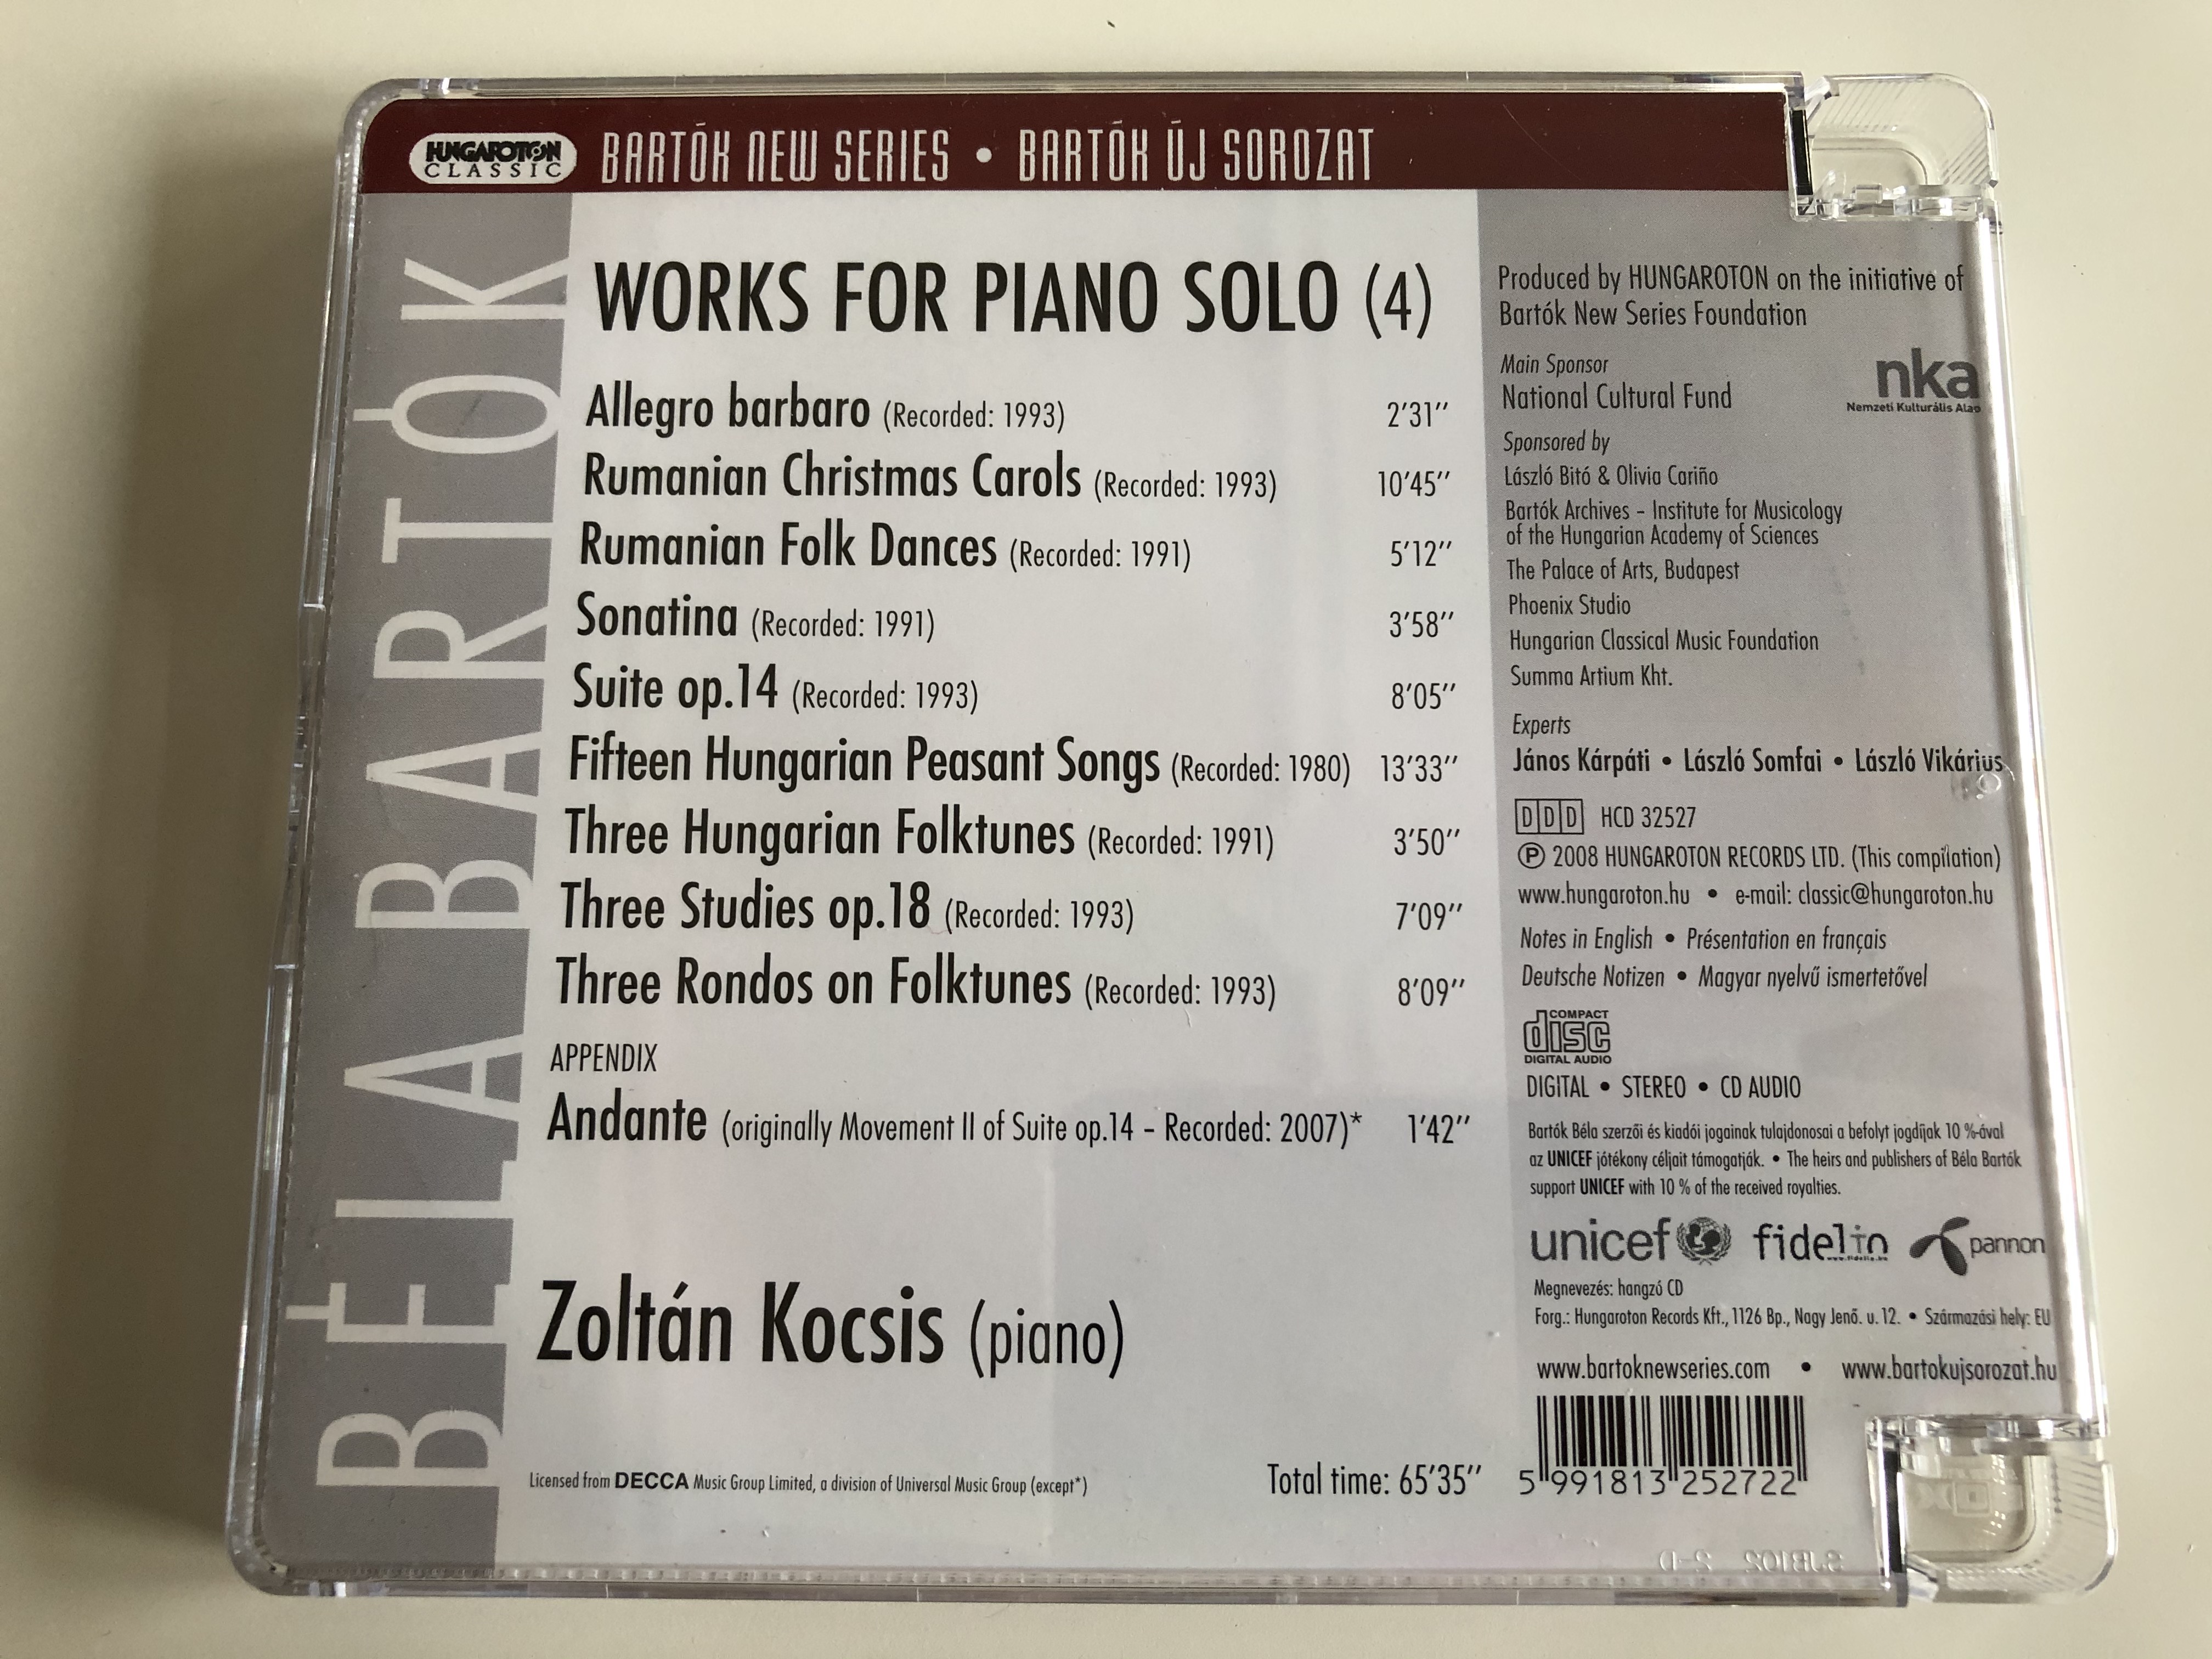 b-la-bart-k-zolt-n-kocsis-works-for-piano-solo-14-allegro-barbaro-rumanian-christmas-carols-rumanian-folk-dances-sonatina-suite-op.-14-hungaroton-classic-audio-cd-2008-stereo-hcd-32.jpg